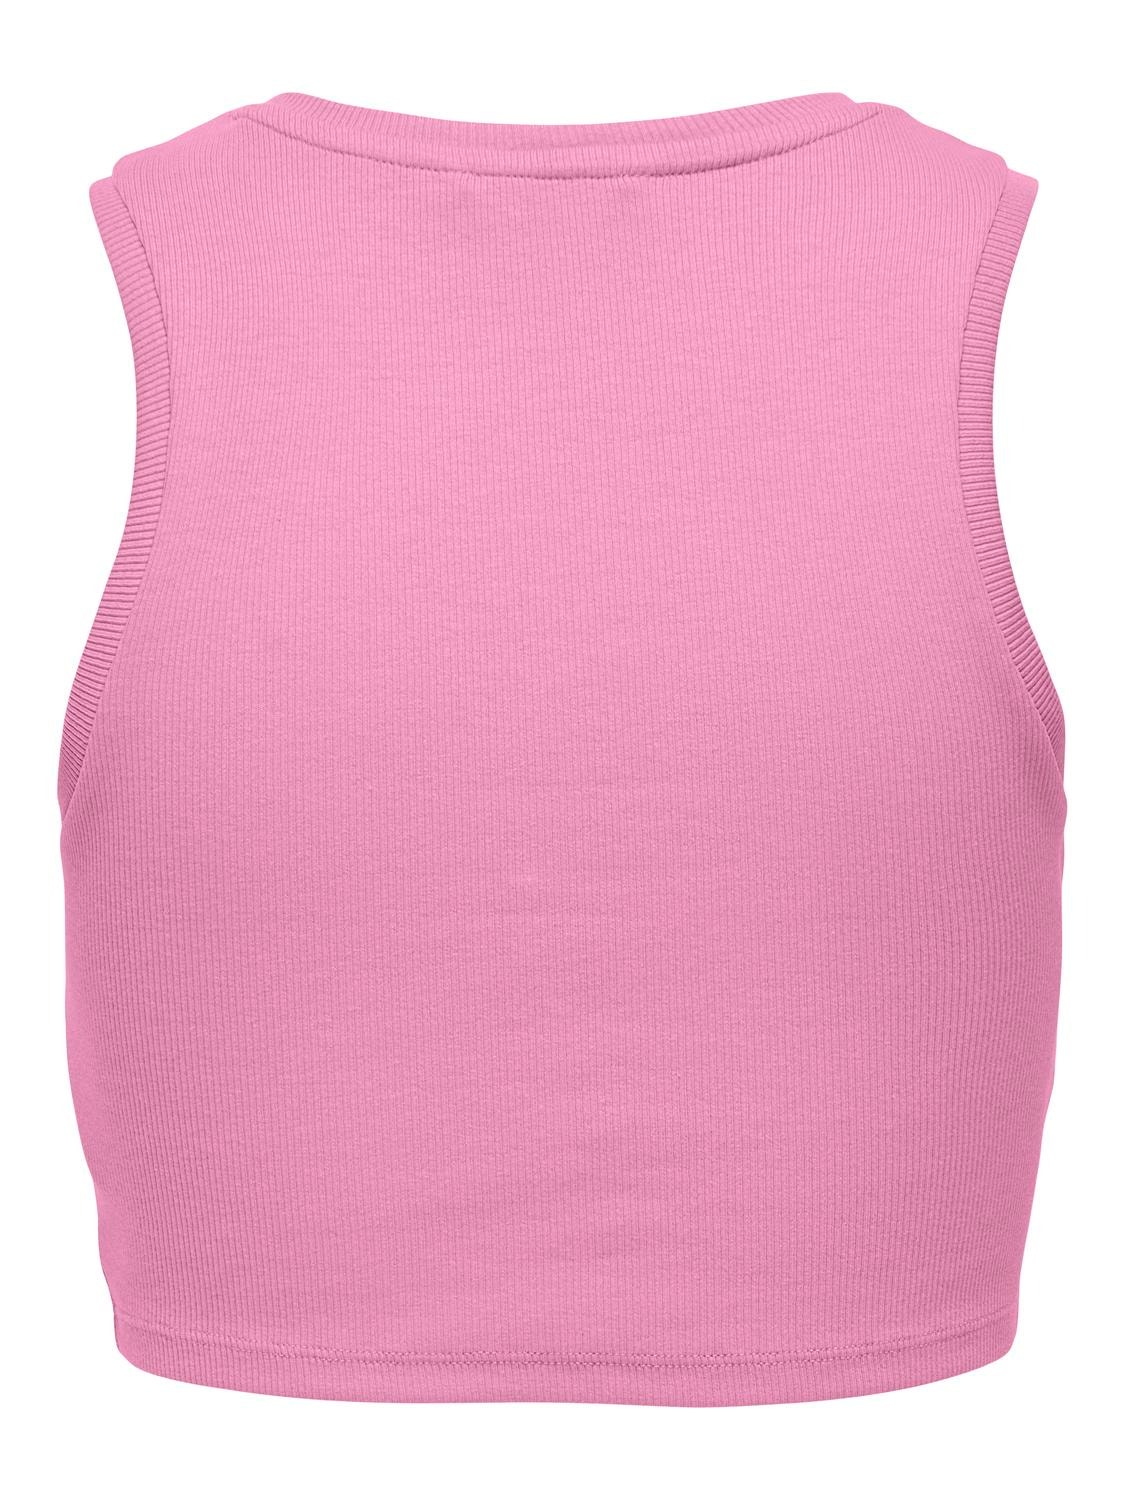 ONLY Slim fit O-hals Tanktop -Begonia Pink - 15282771